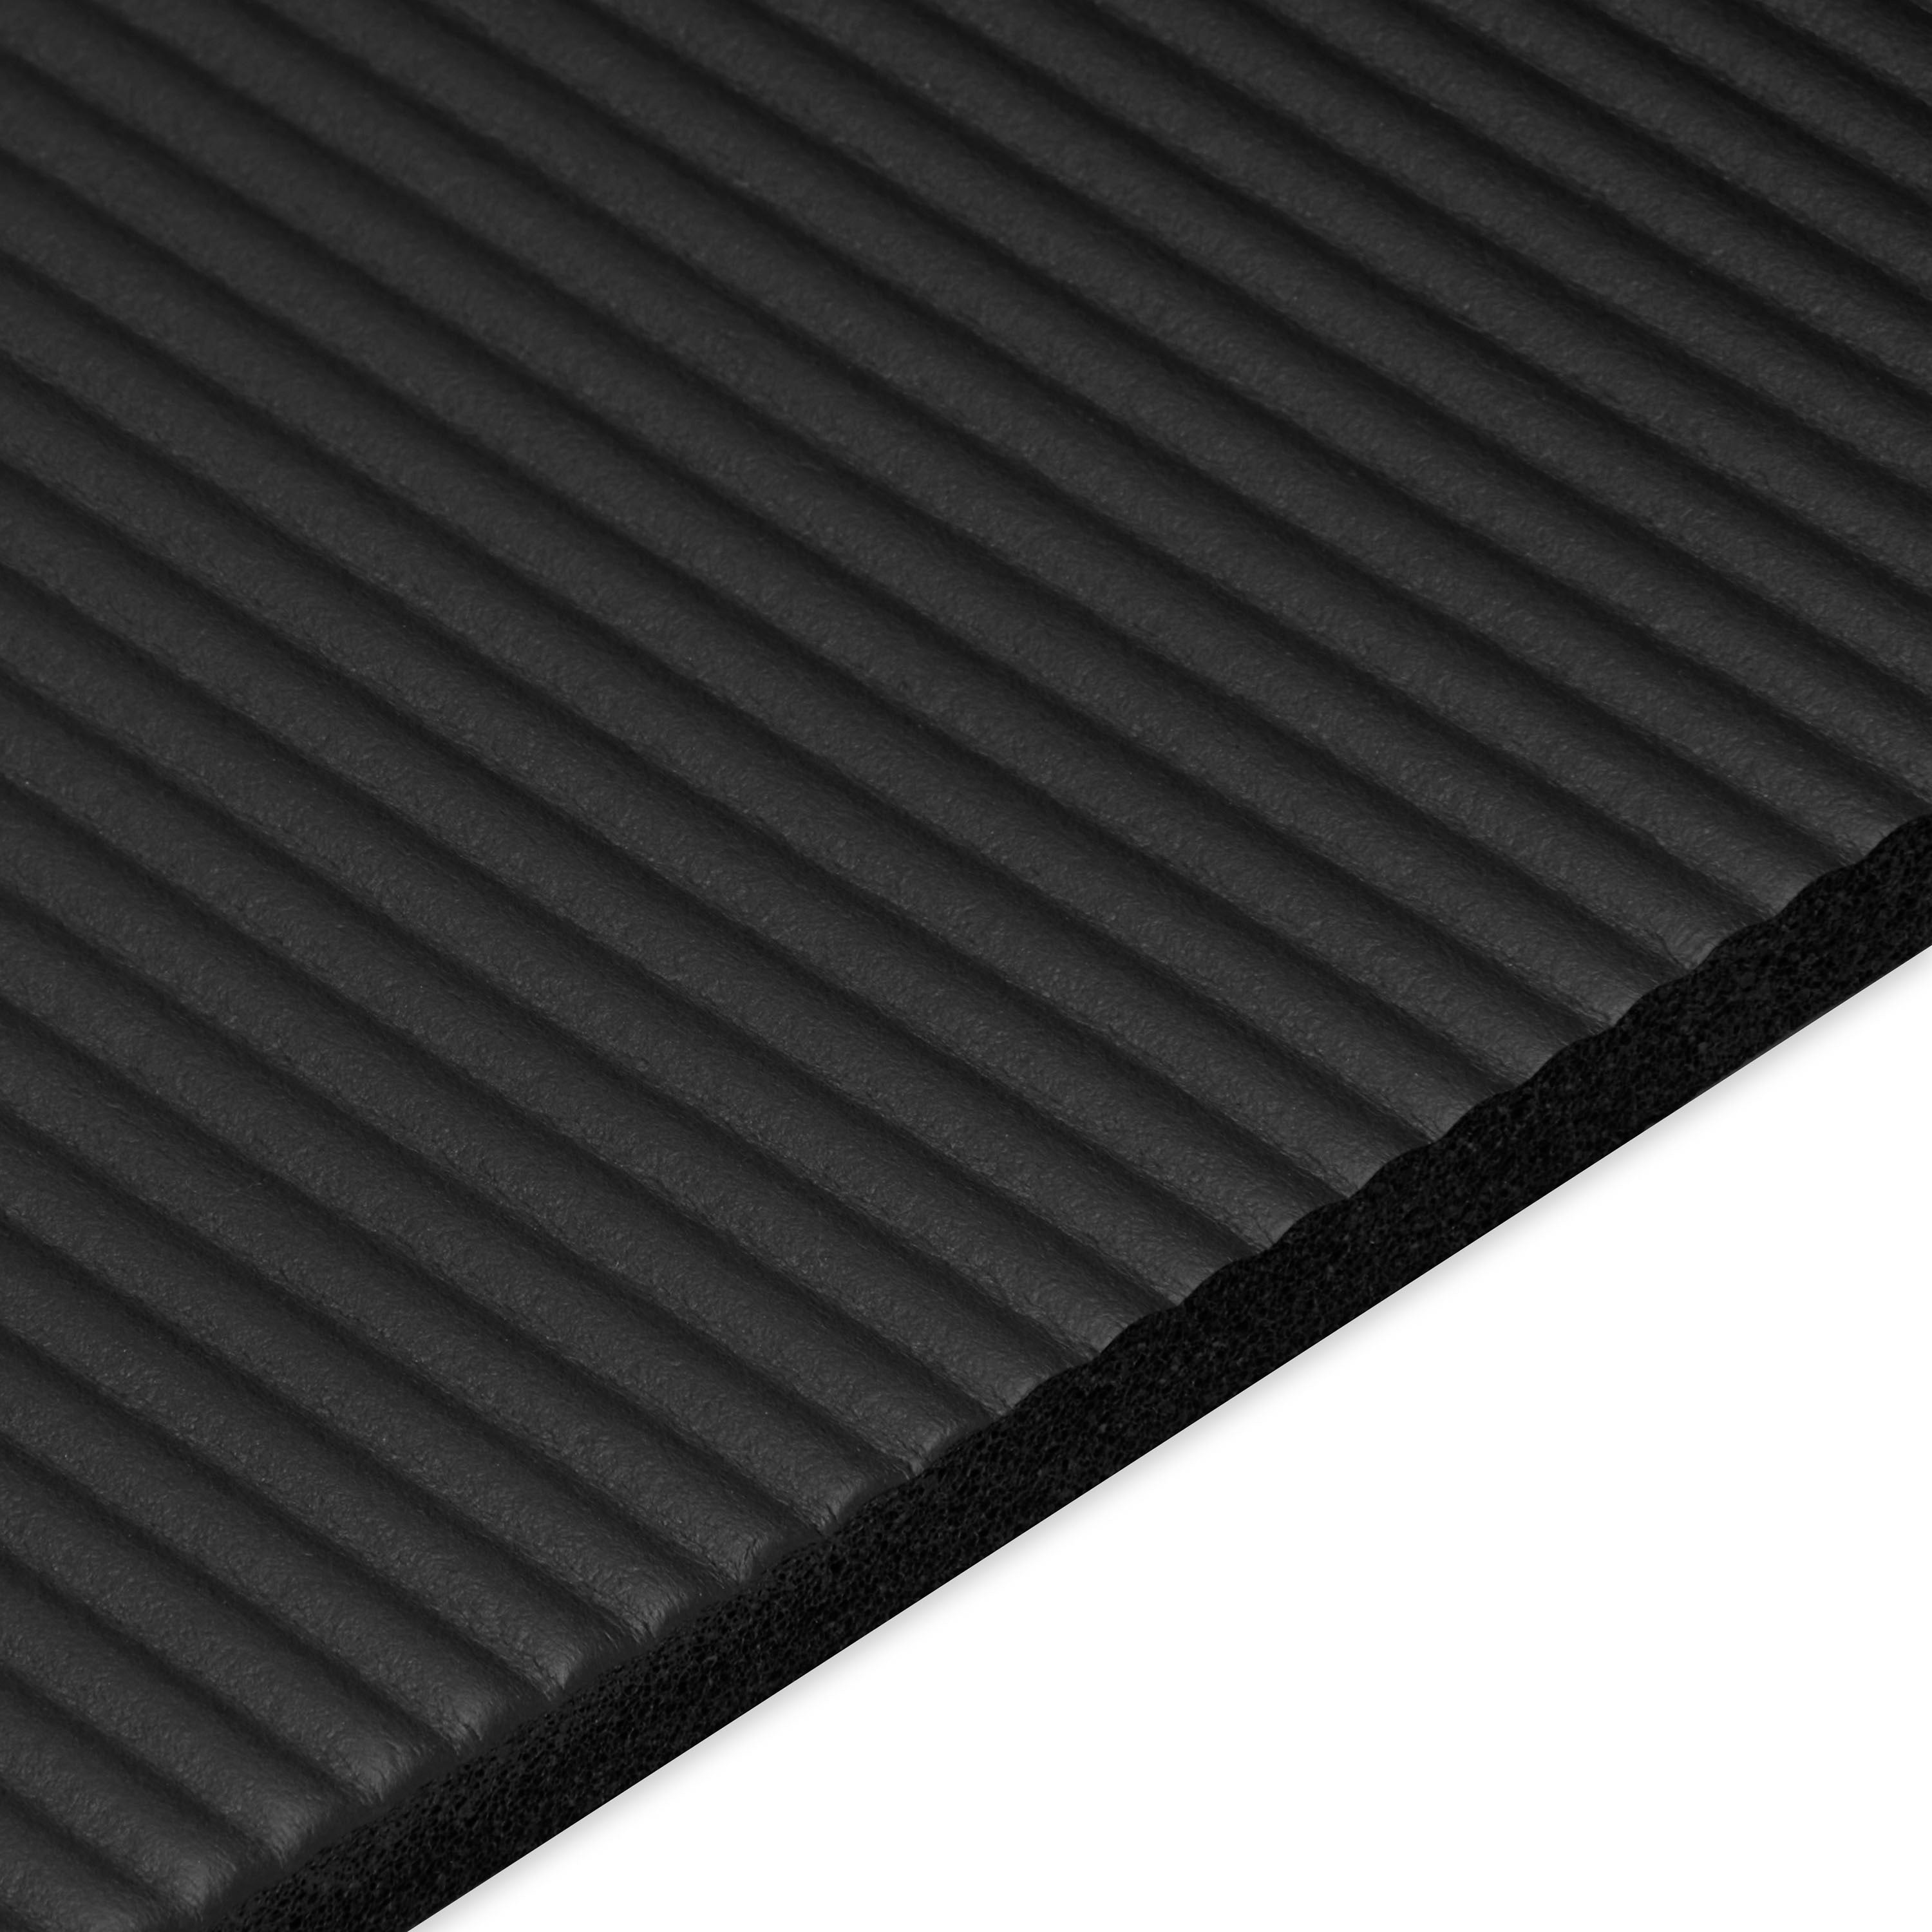 Reebok 10mm Fitness Mat Black texture closeup